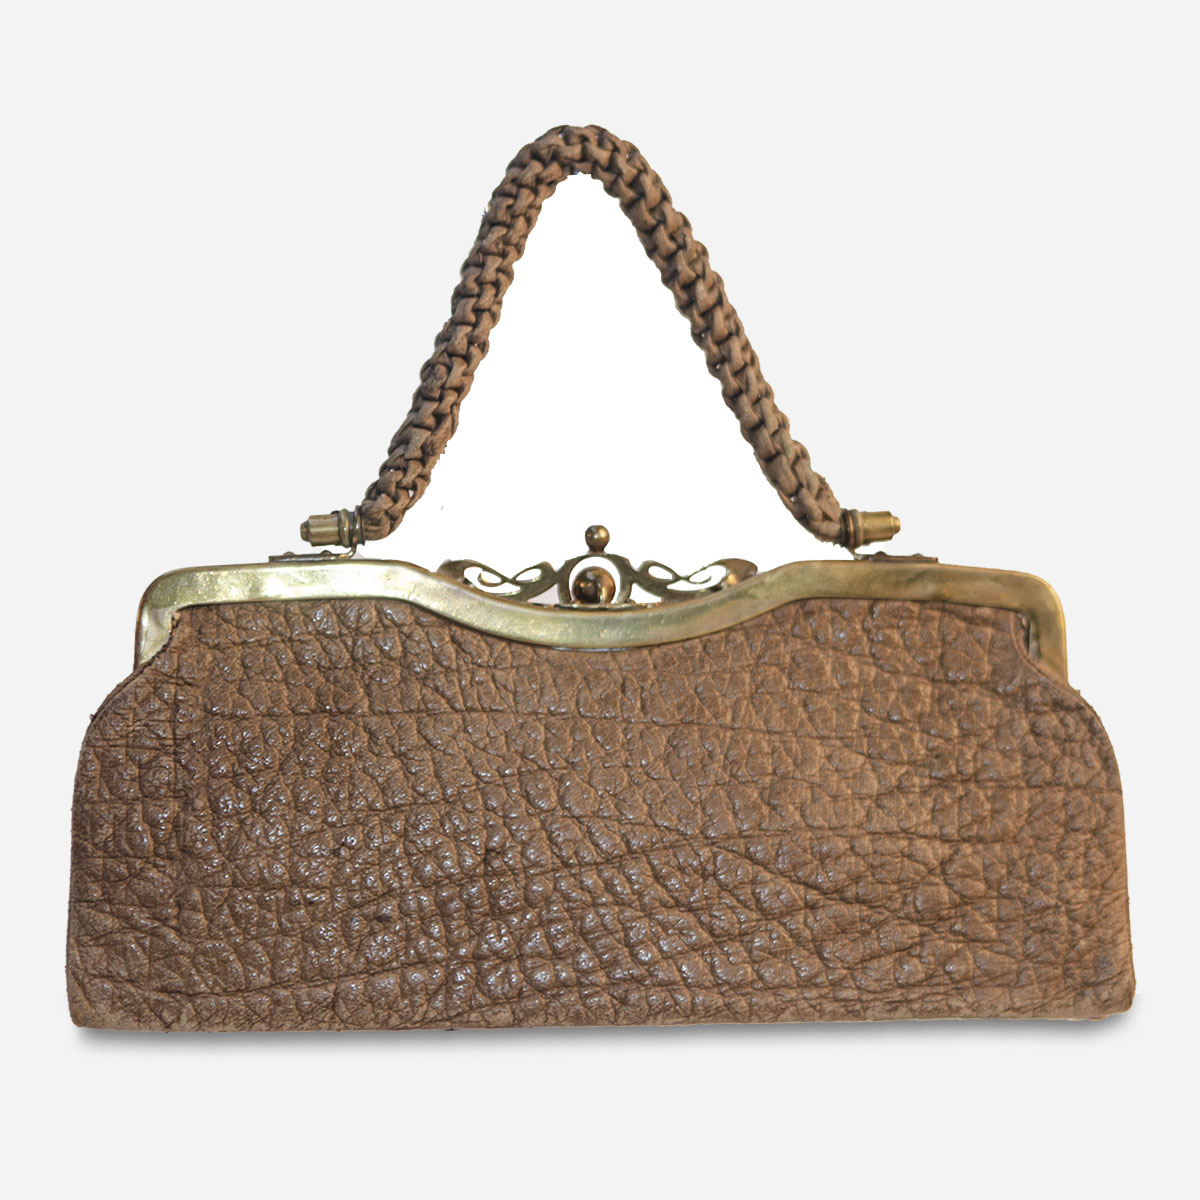 antique pebble leather handbag